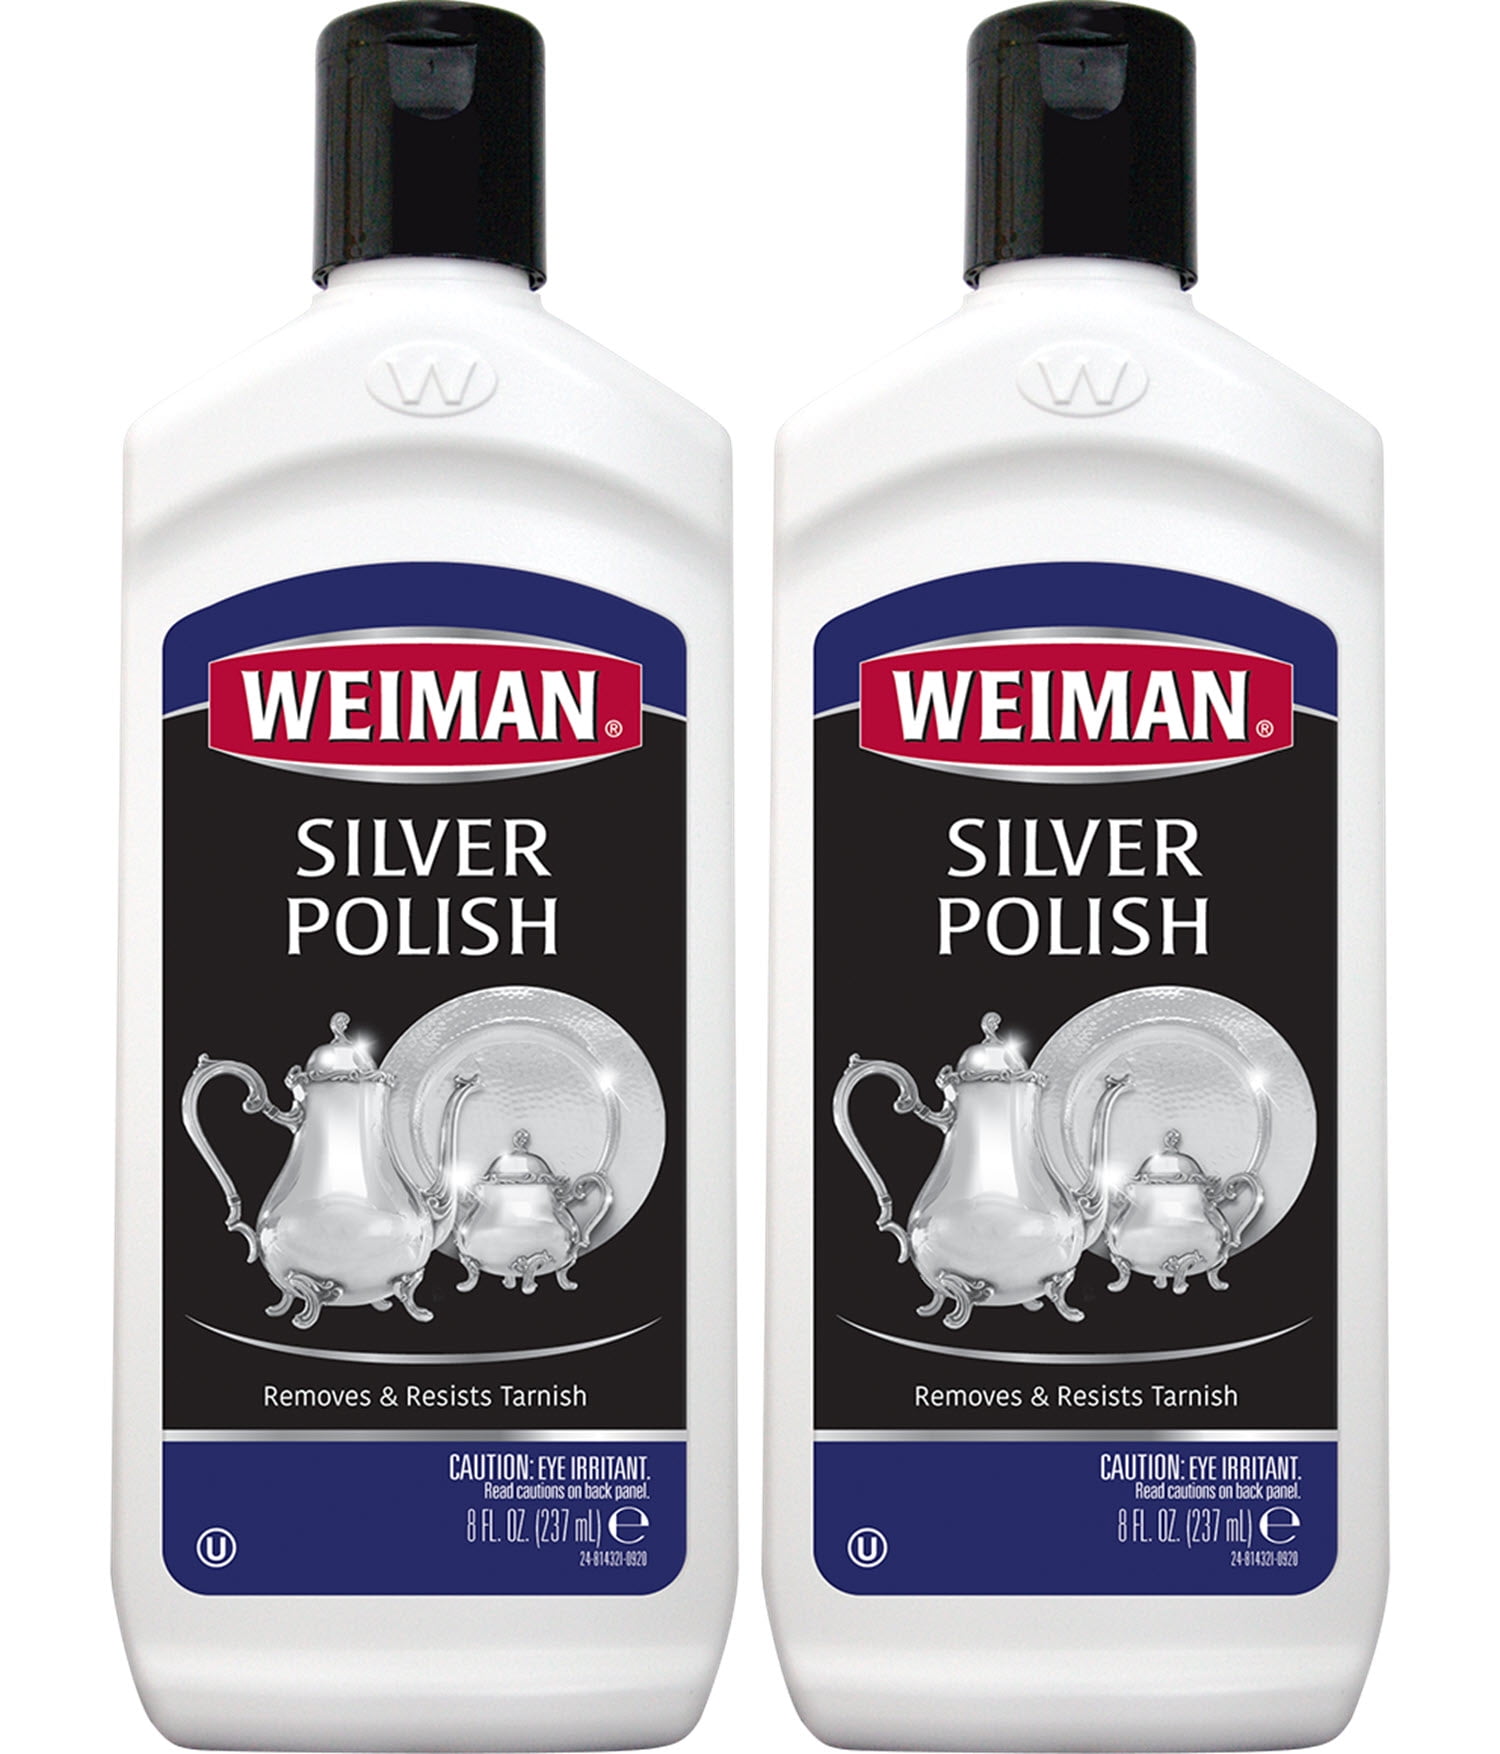 Silver Polishing, The Care of Silver / How do I Polish Silver